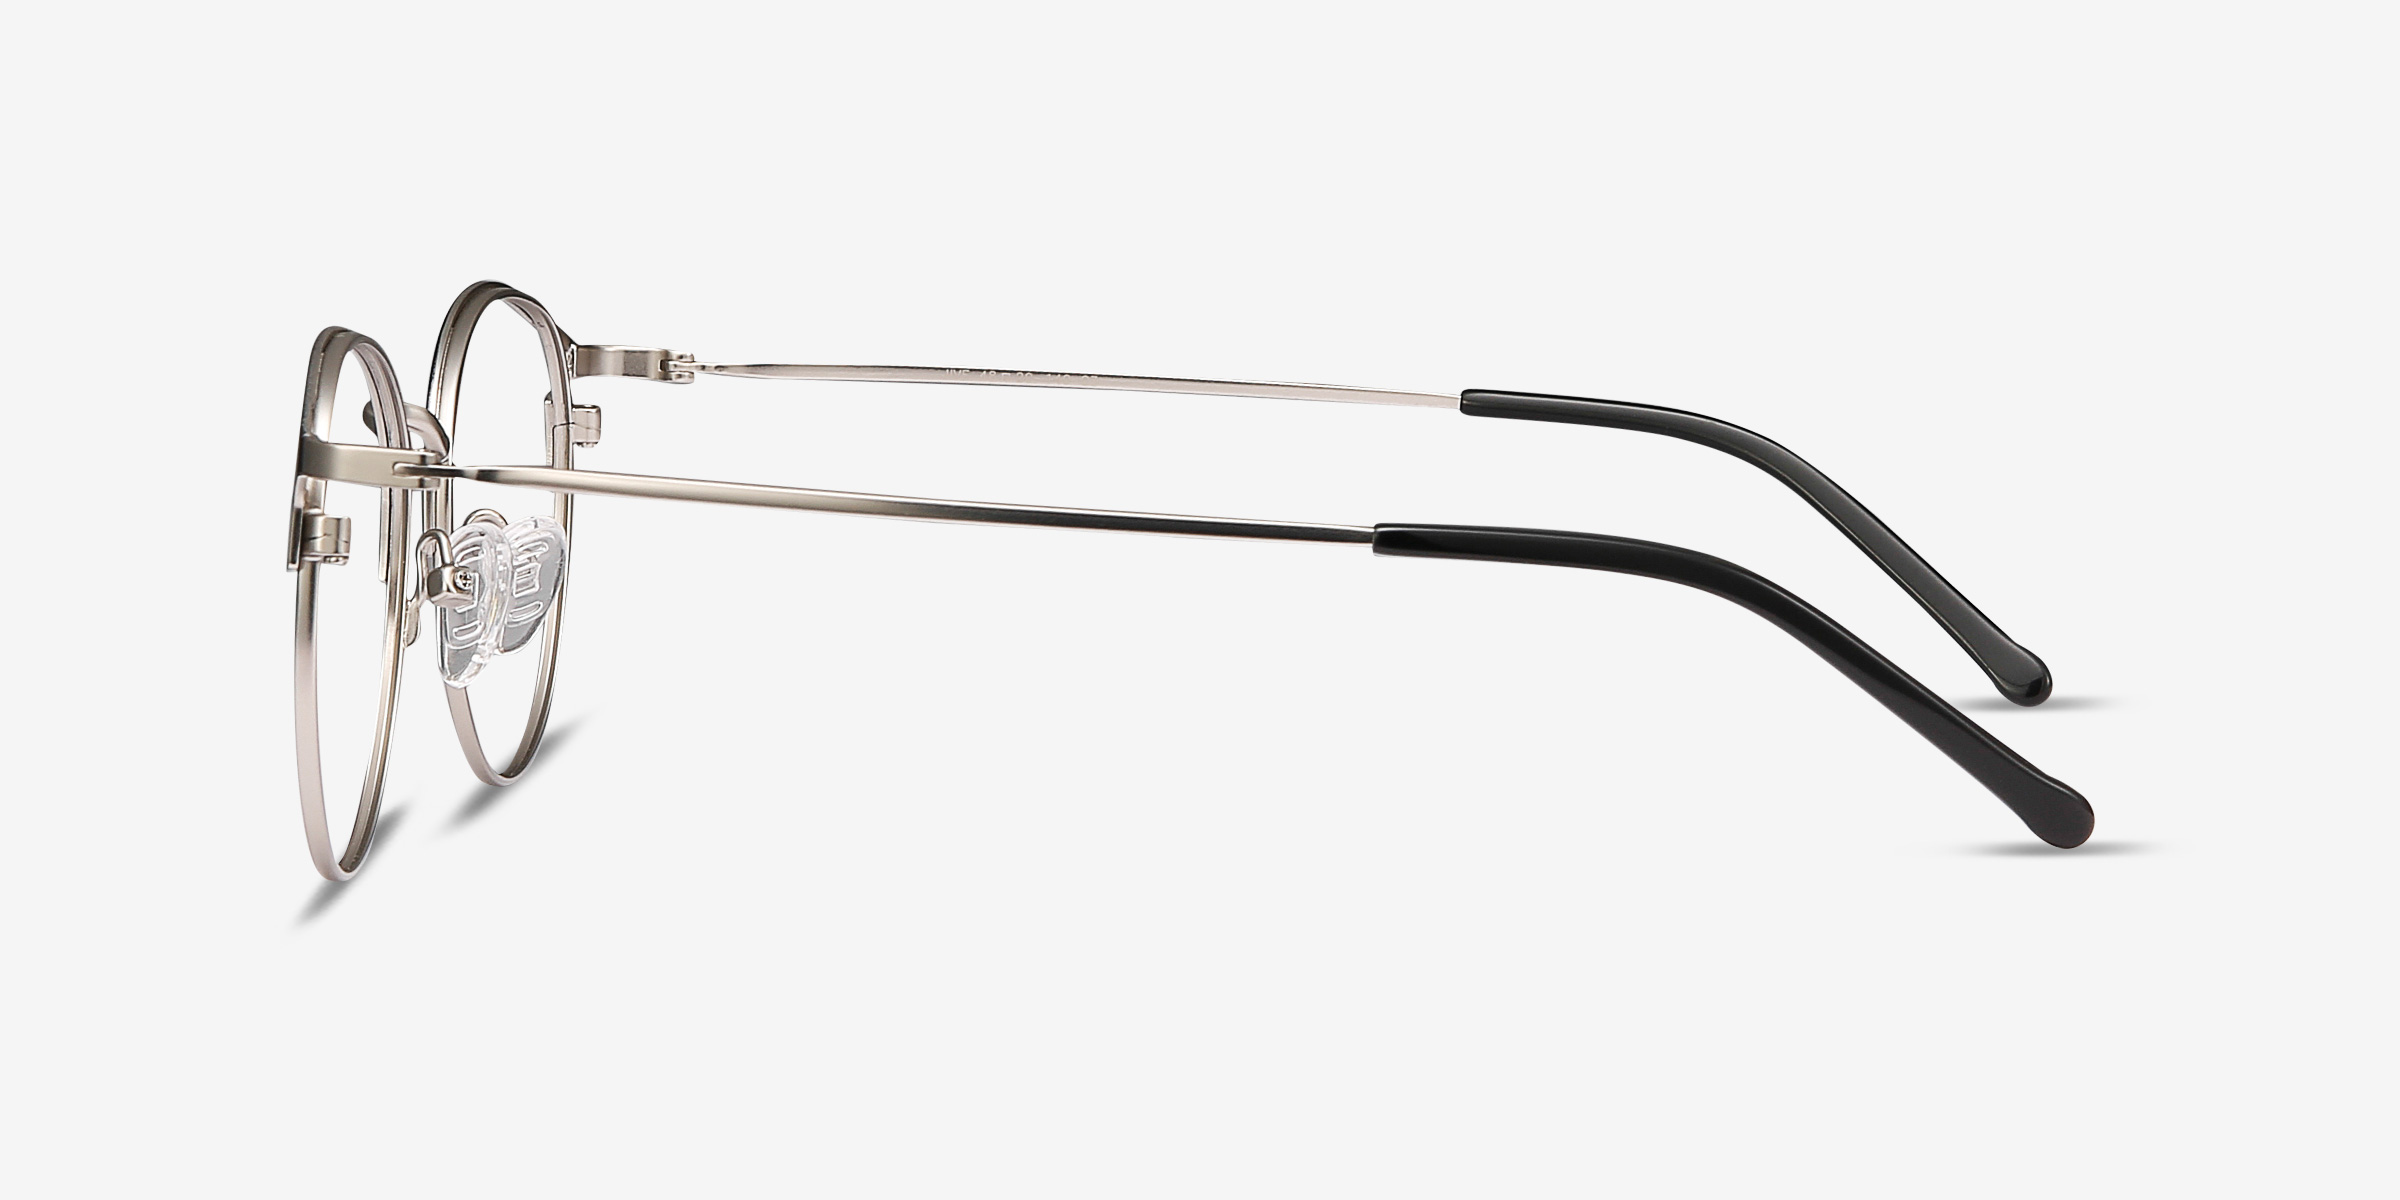 Jive Round Black & Silver Glasses for Women | Eyebuydirect